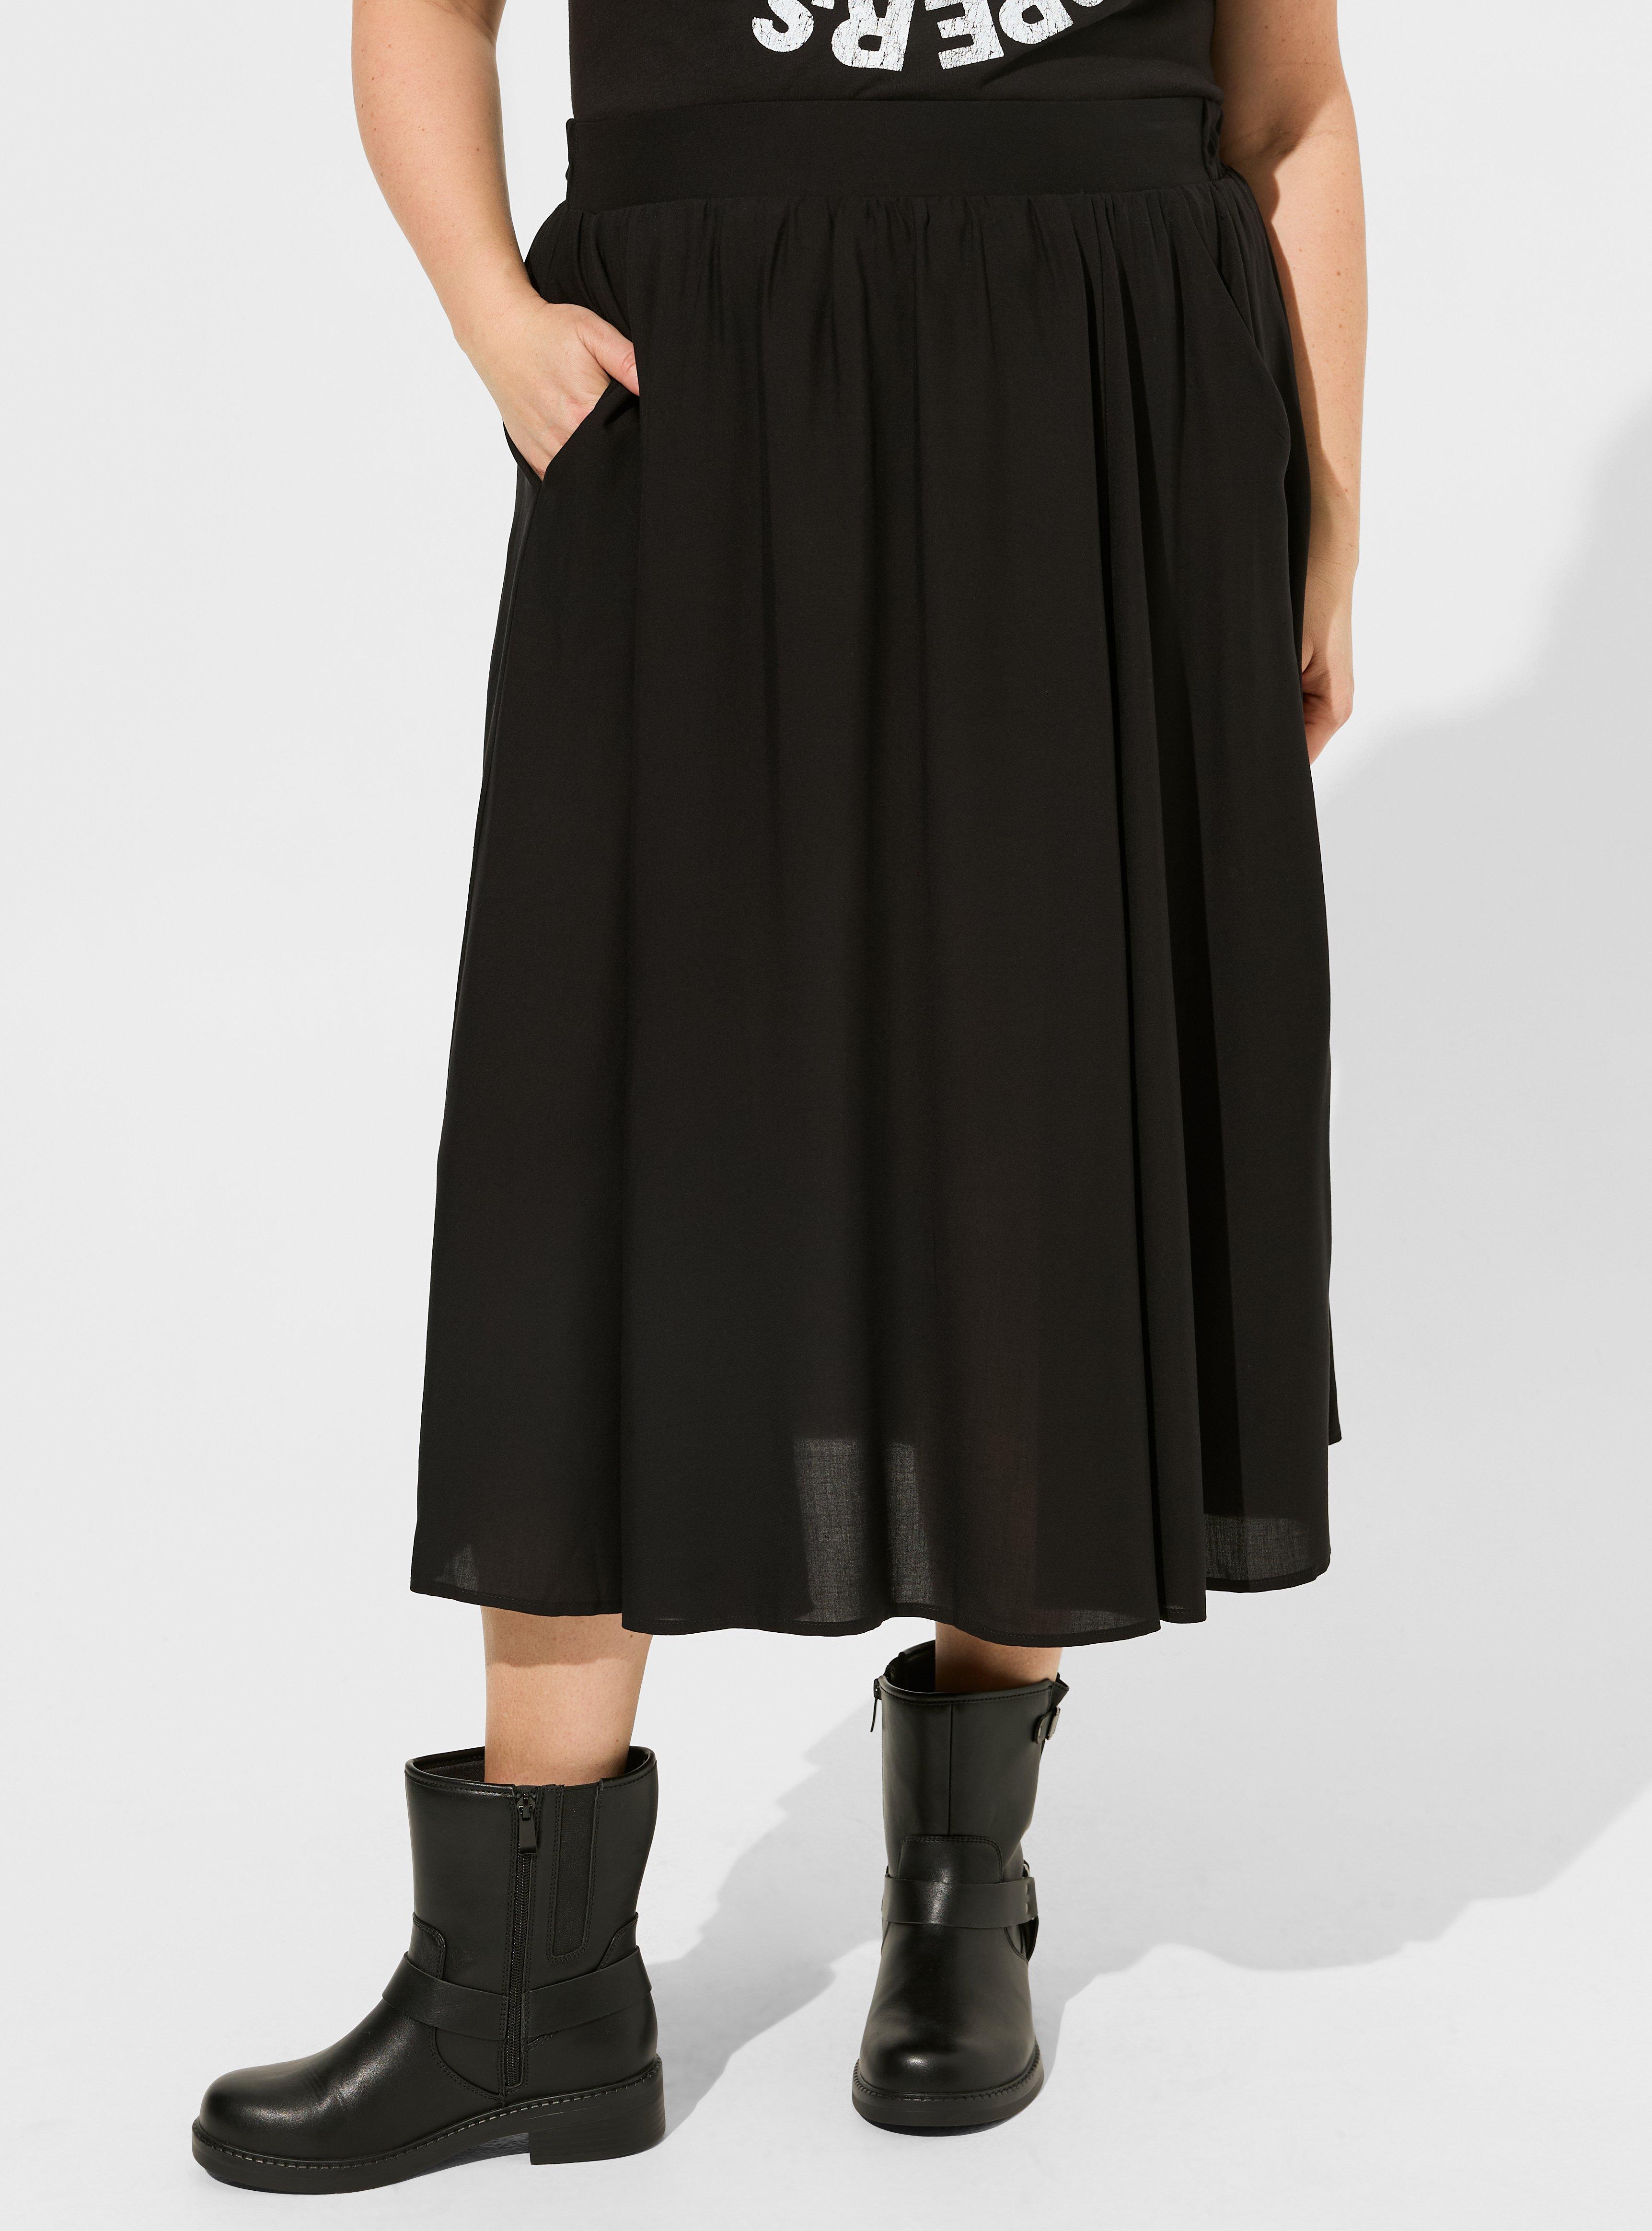 Plus Size - Tea Length Challis A-line Skirt - Torrid